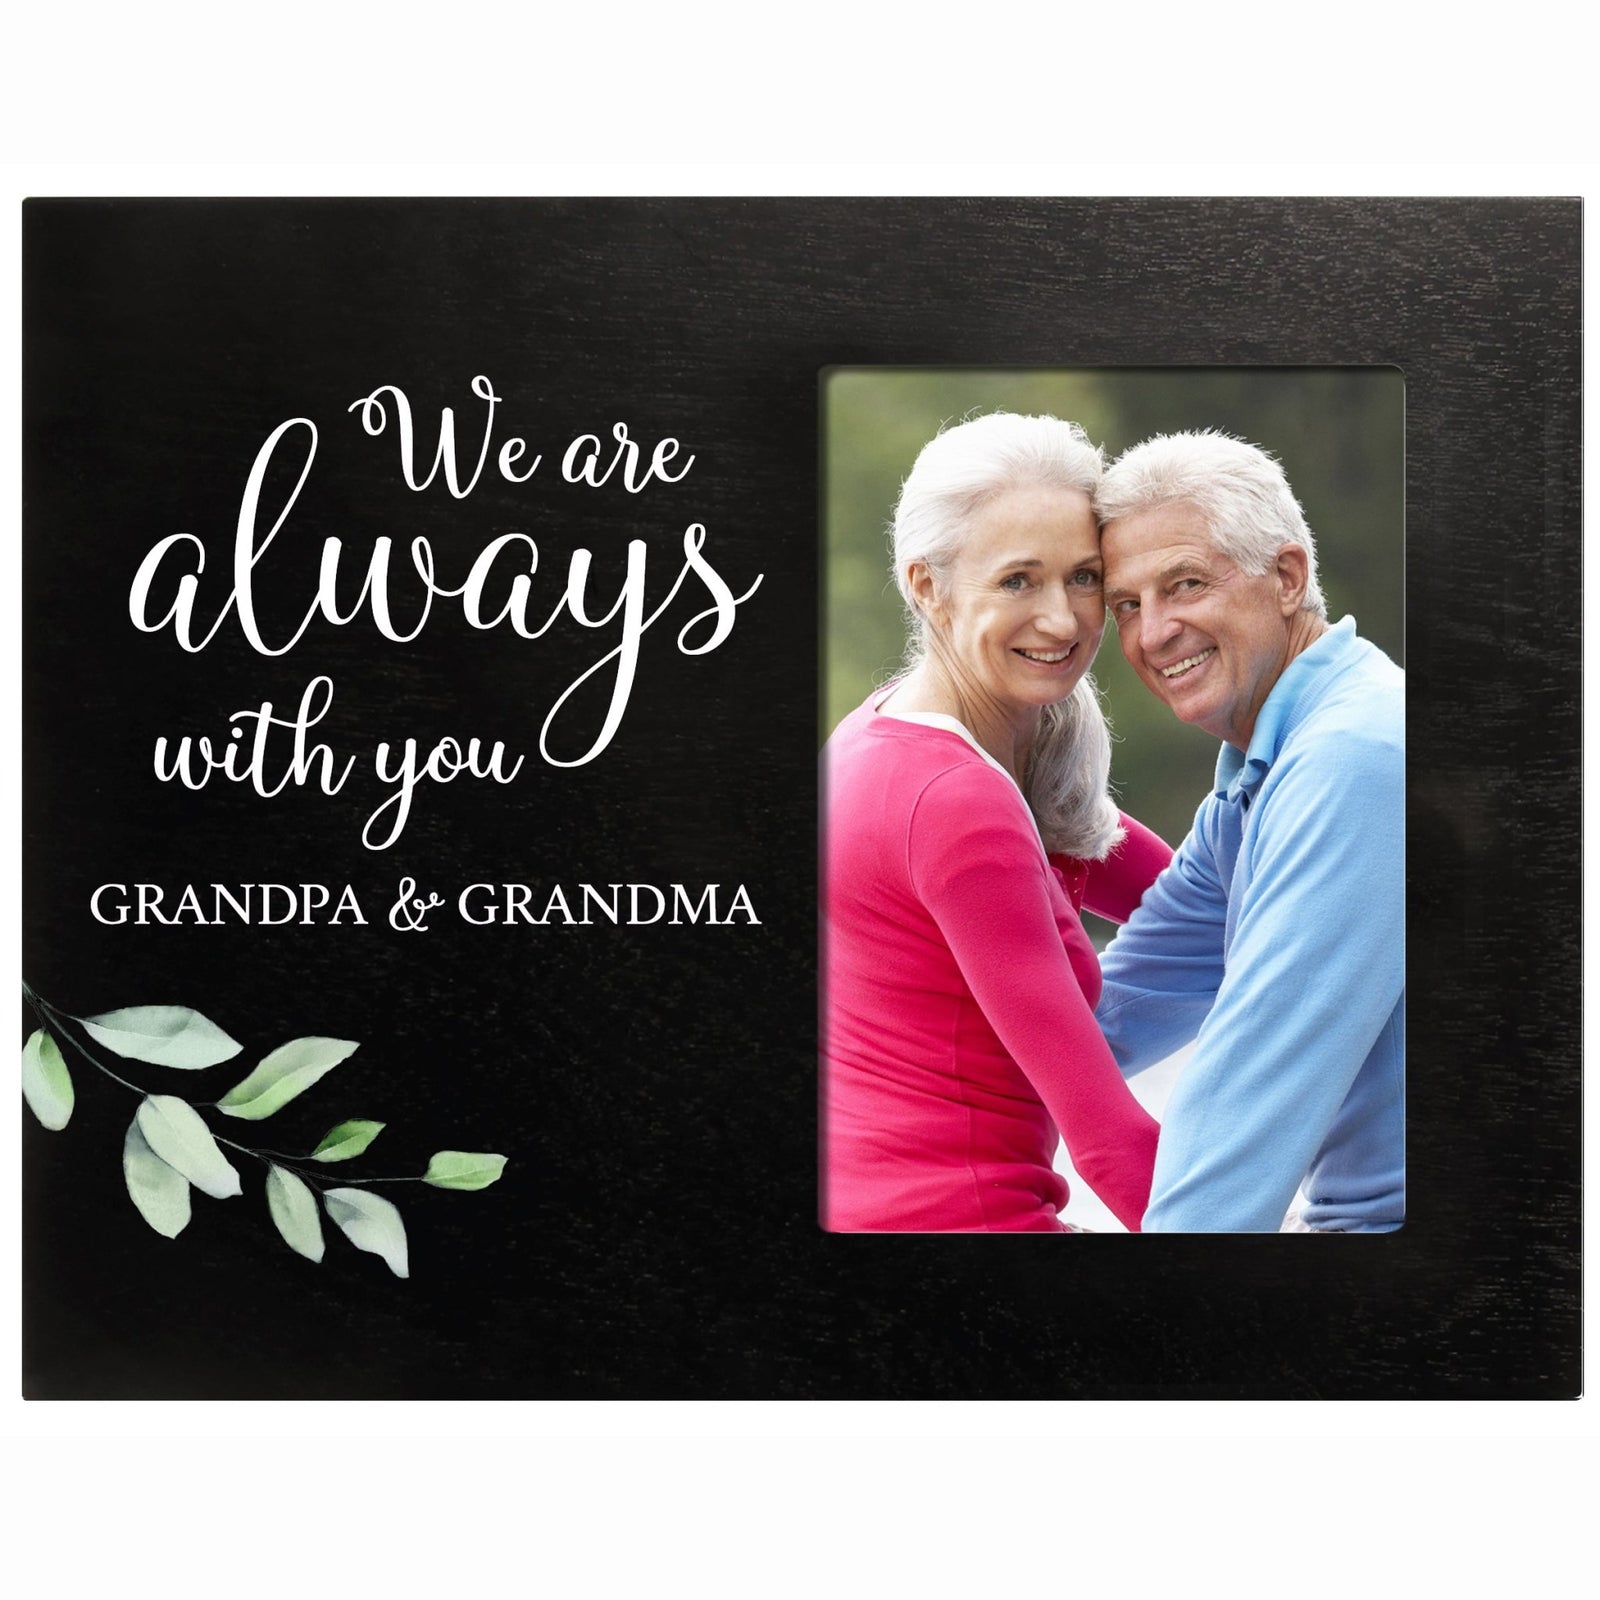 Sentimental Human Memorial Photo Frame Gift Bereavement Gift Idea - We are always - LifeSong Milestones